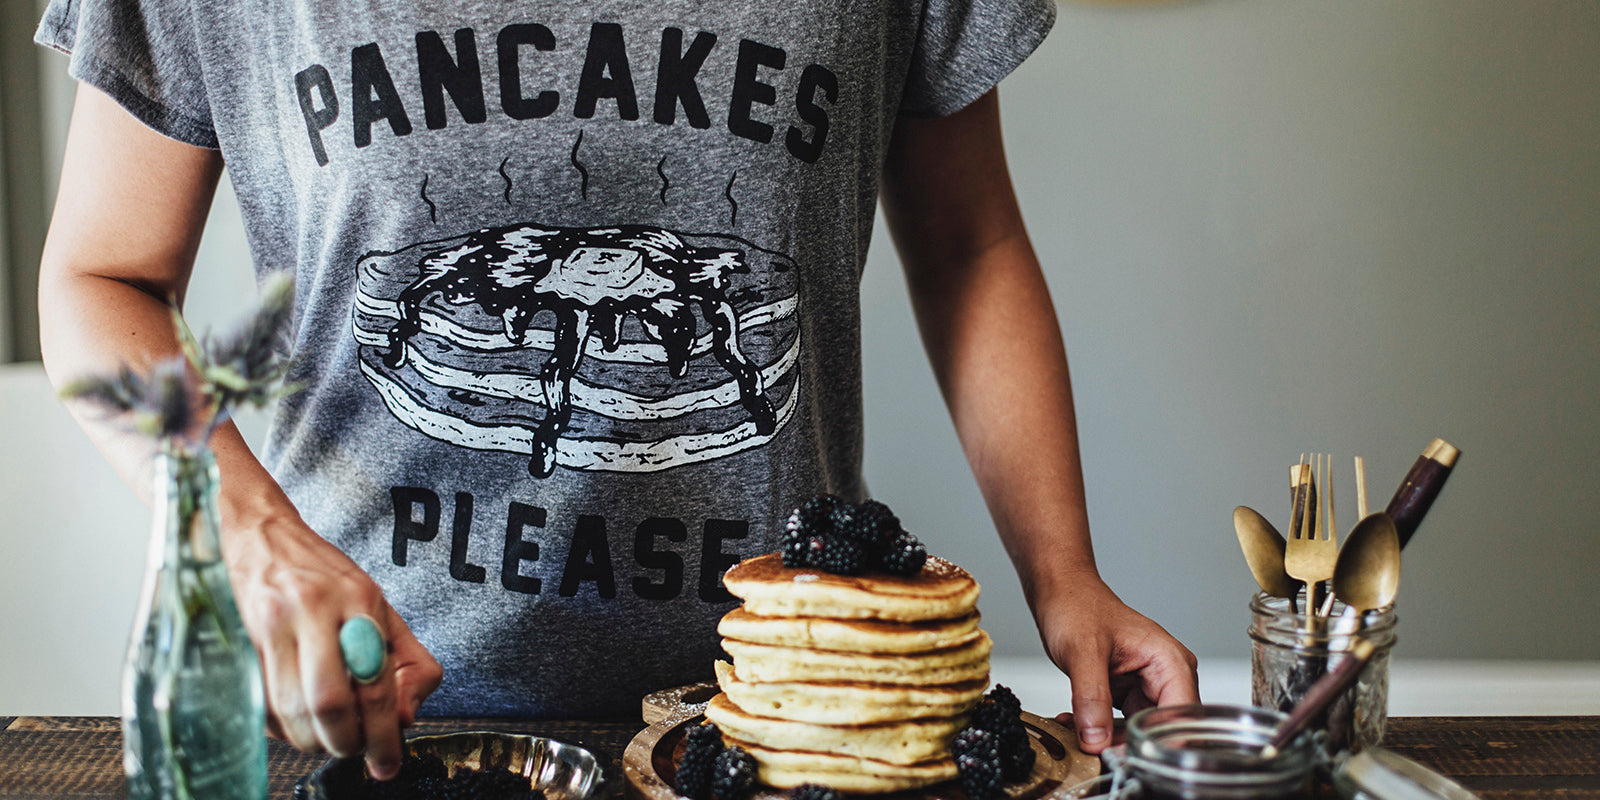 Pancakes Please Women's Vintage Tri-Blend Slouchy Dolman T-shirt for Breakfast Brunch Foodie Food Lovers